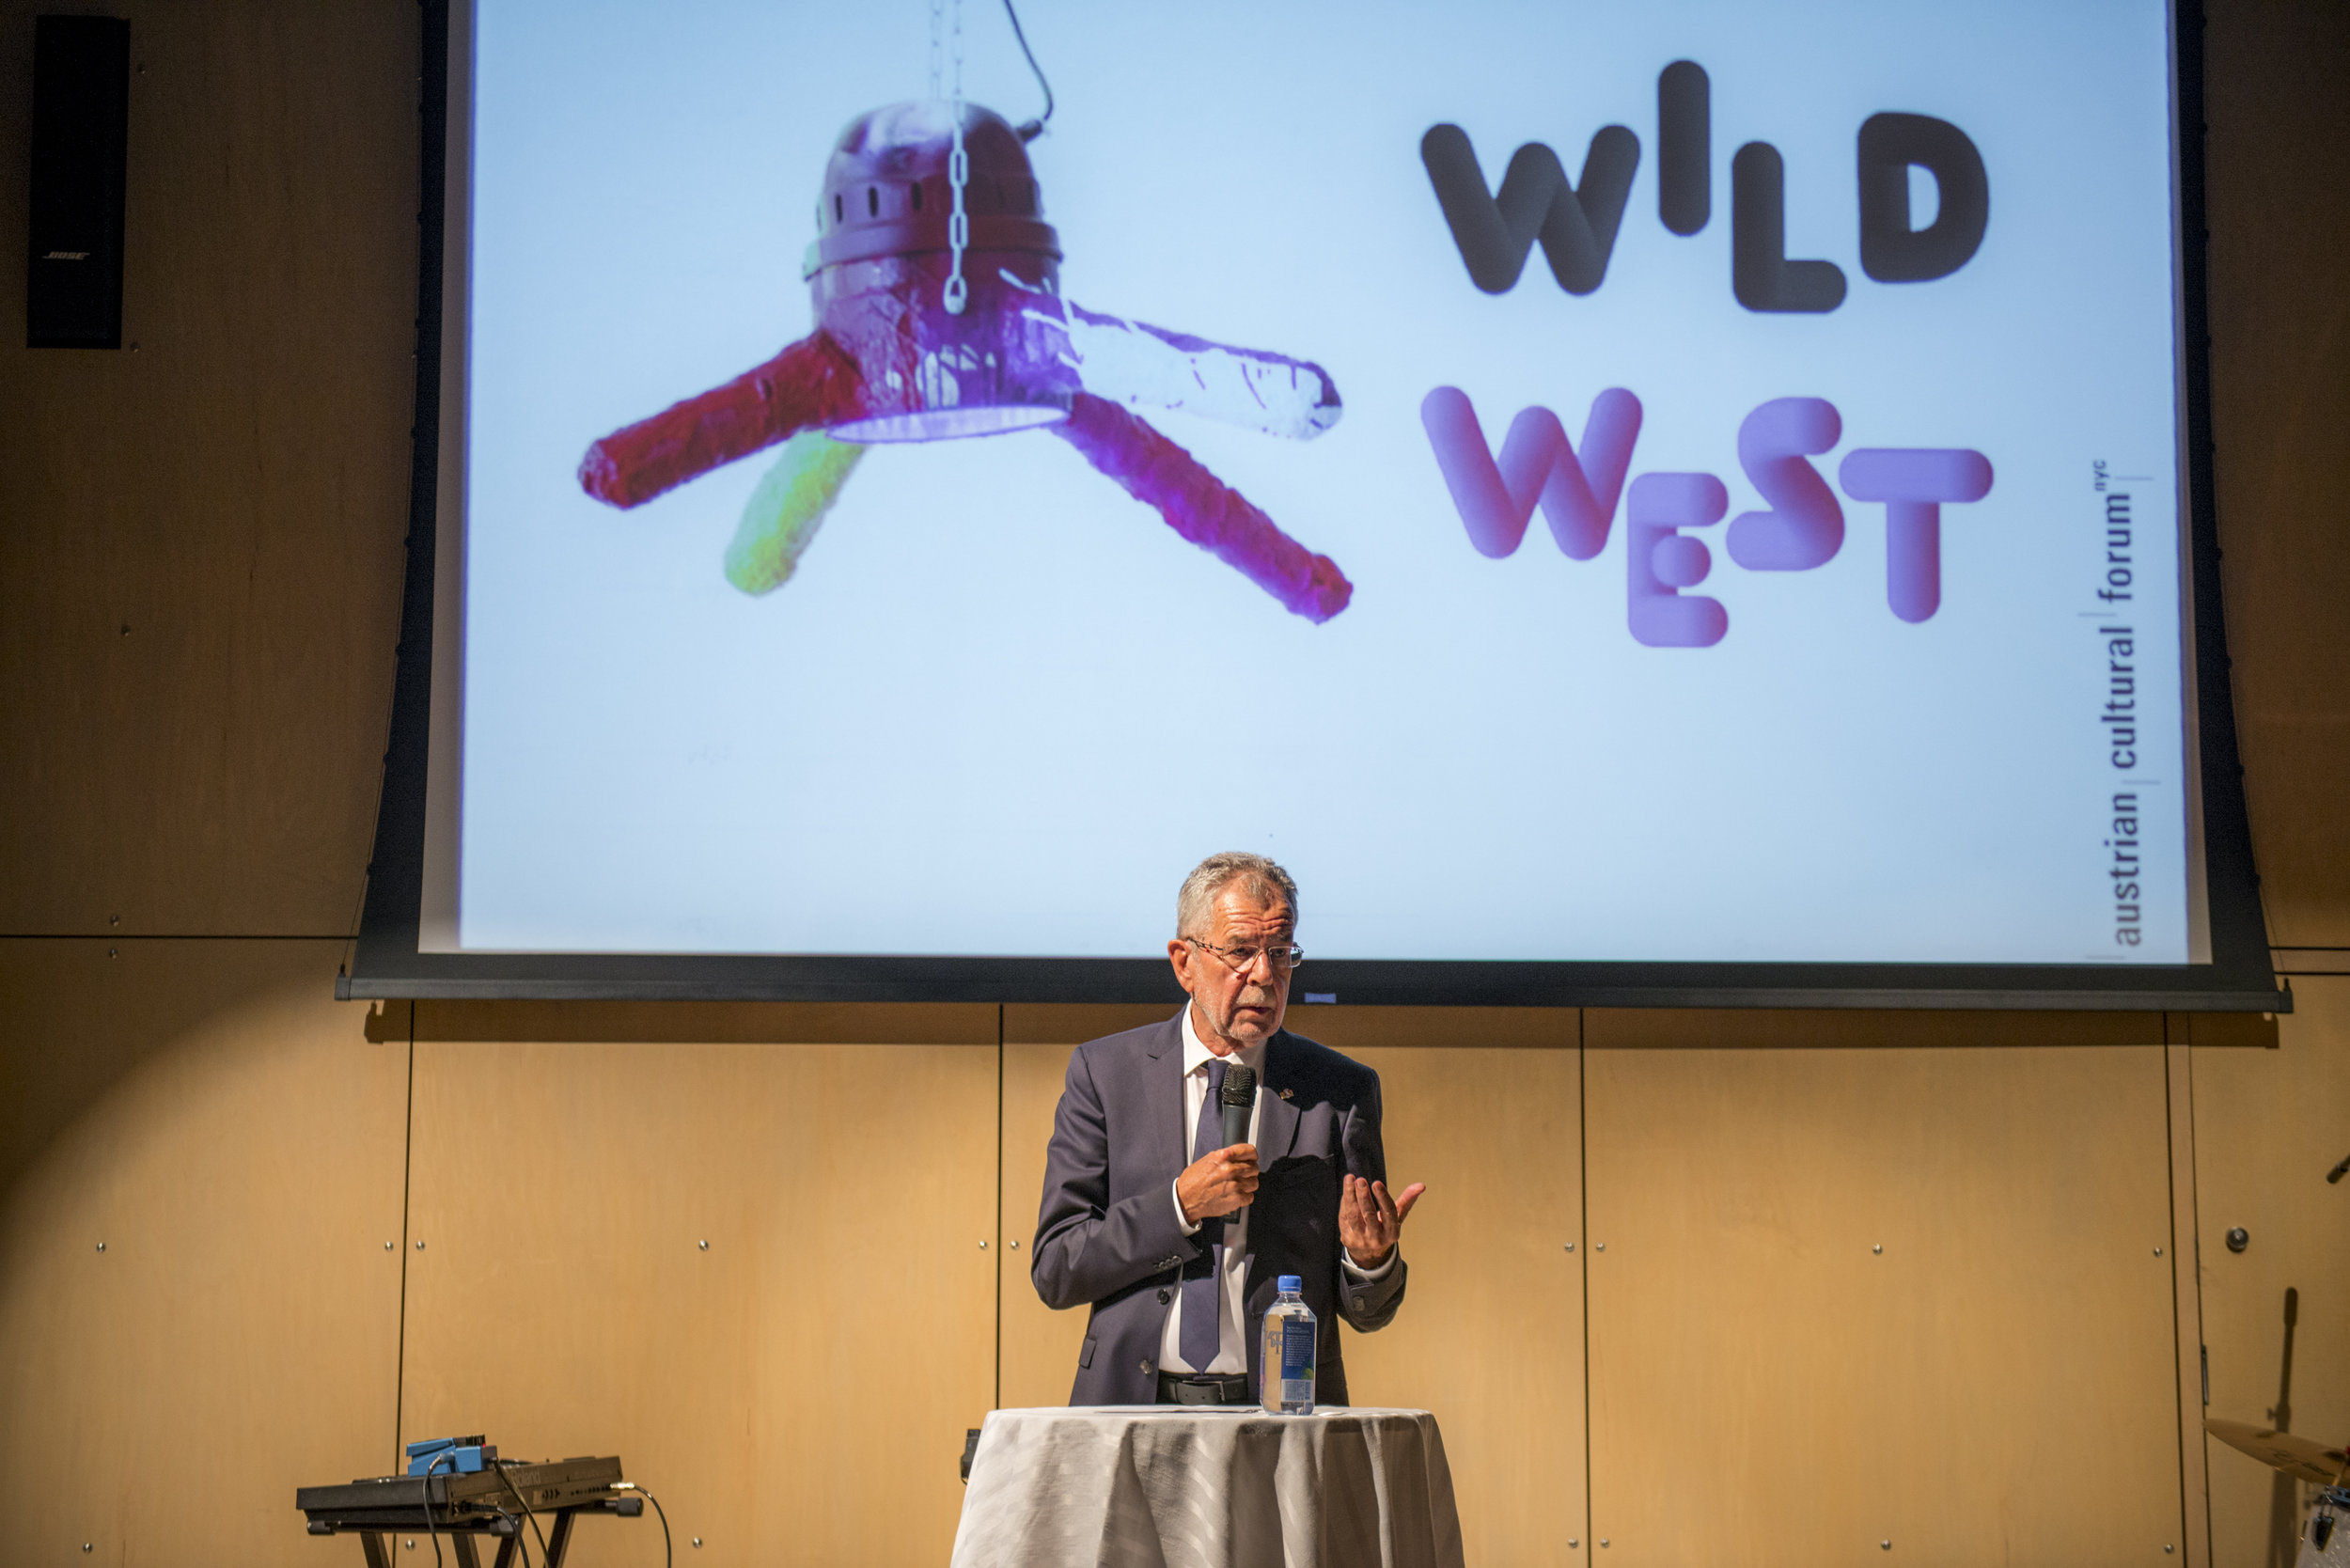  Remarks by President Alexander Van der Bellen at the &nbsp;WILD WEST  Opening Reception, September 19, 2017, at the Austrian Cultural Forum New York, Photo: David Plakke/ACFNY 